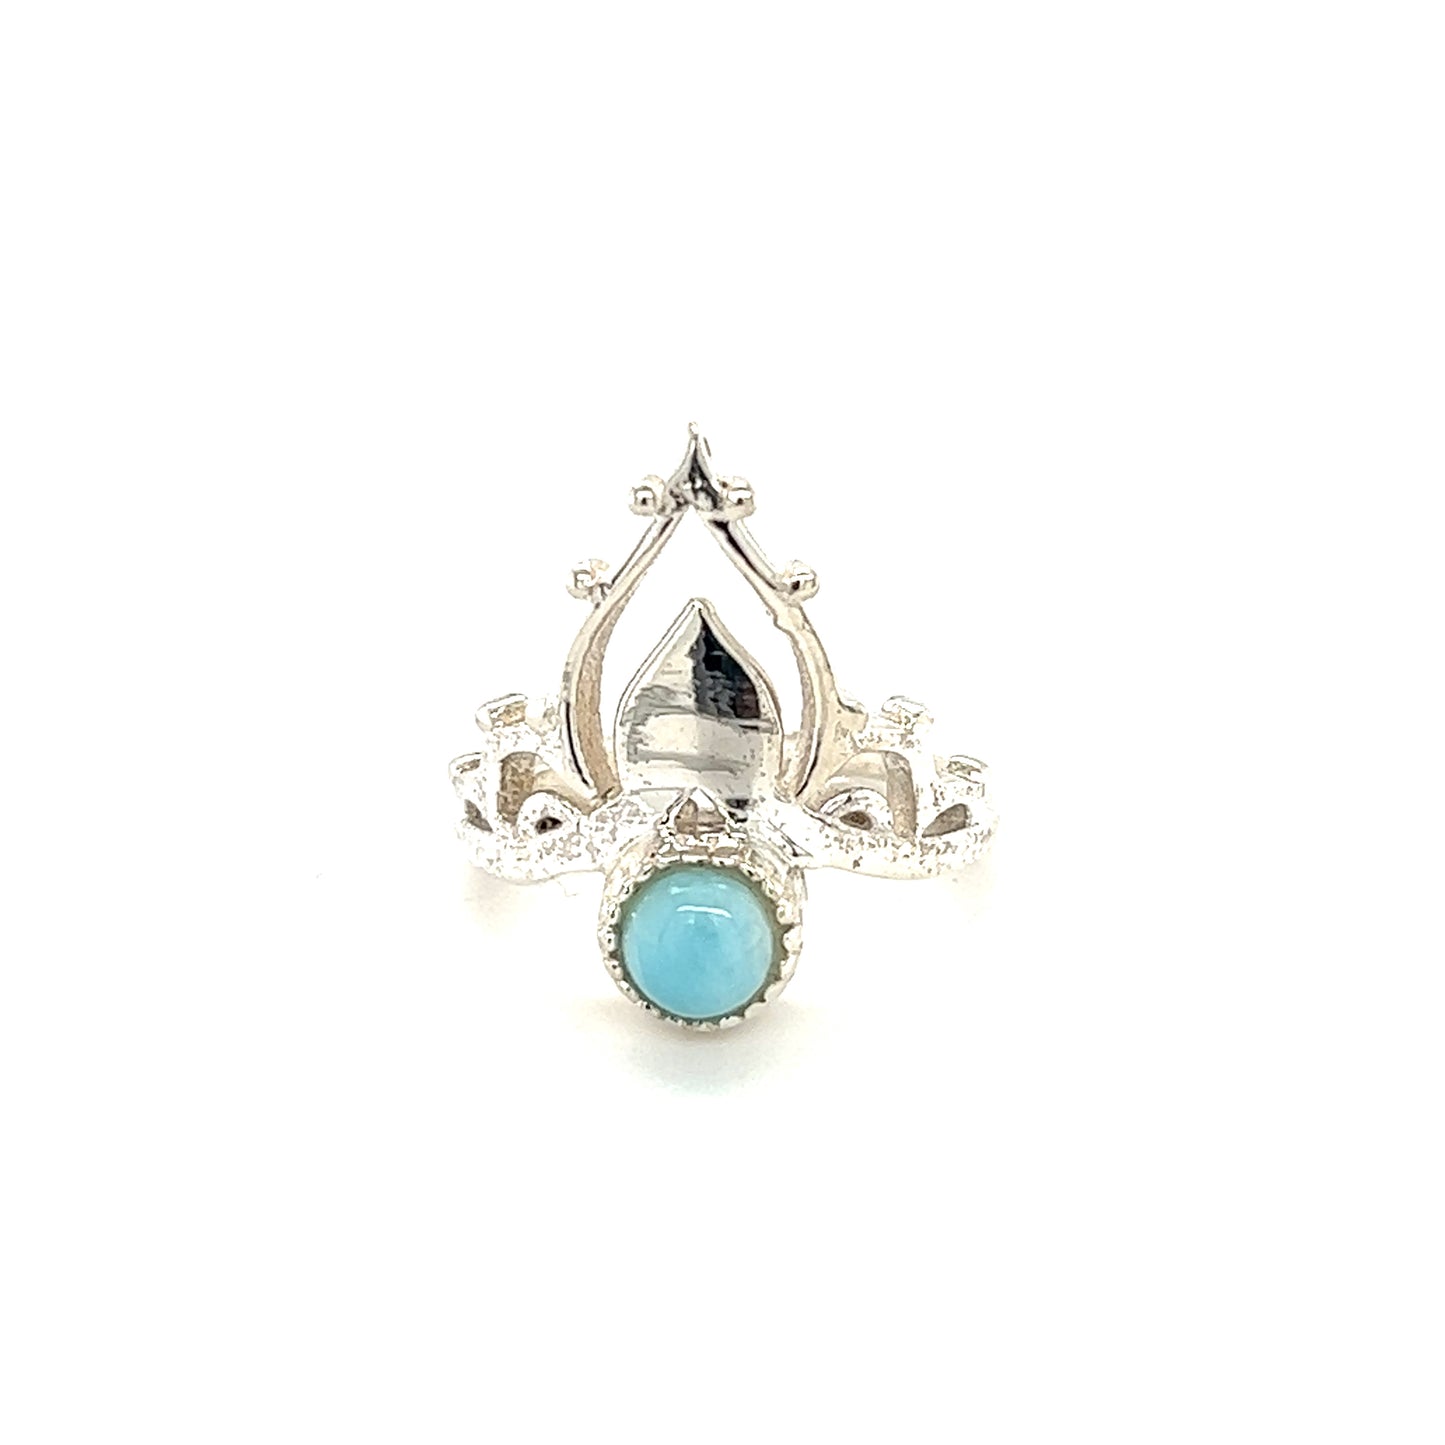 A Mandala Crown Ring with Natural Gemstones.